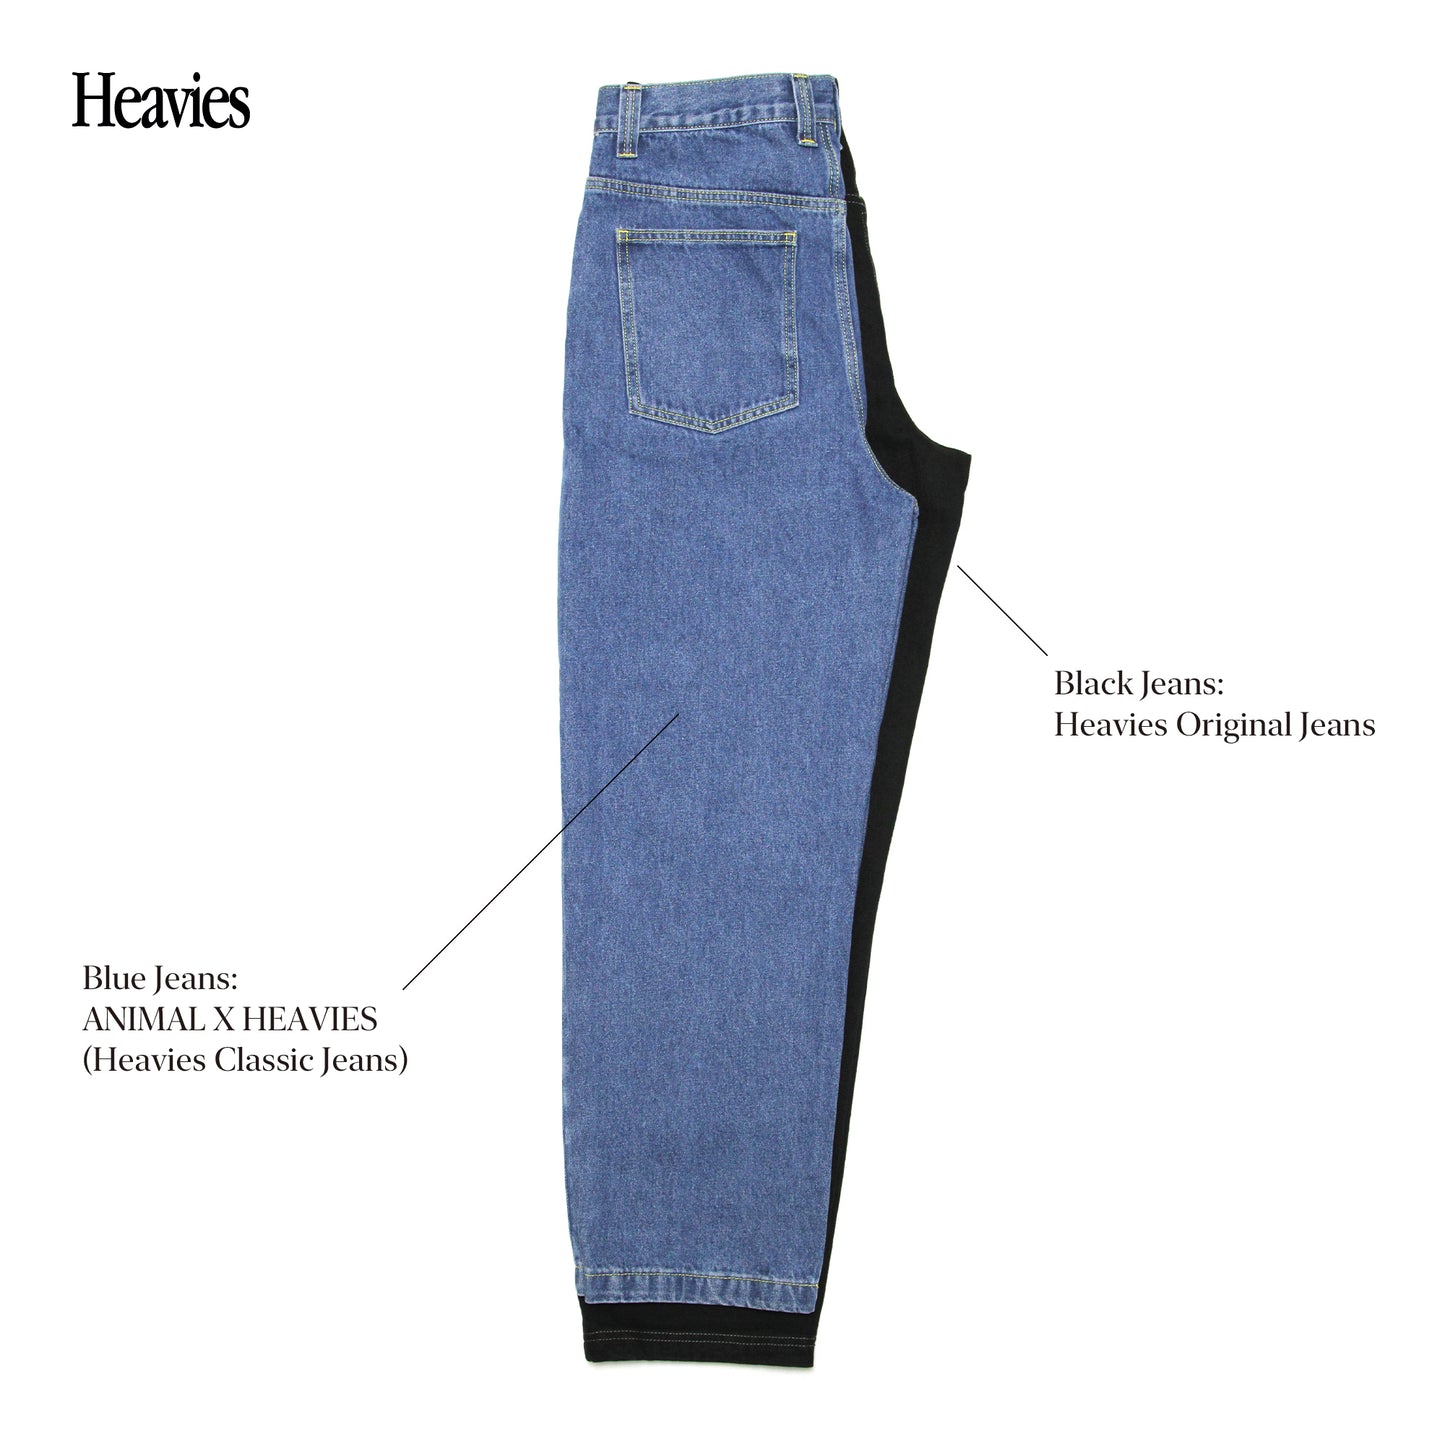 ANIMAL X HEAVIES - Classic Jeans/Black